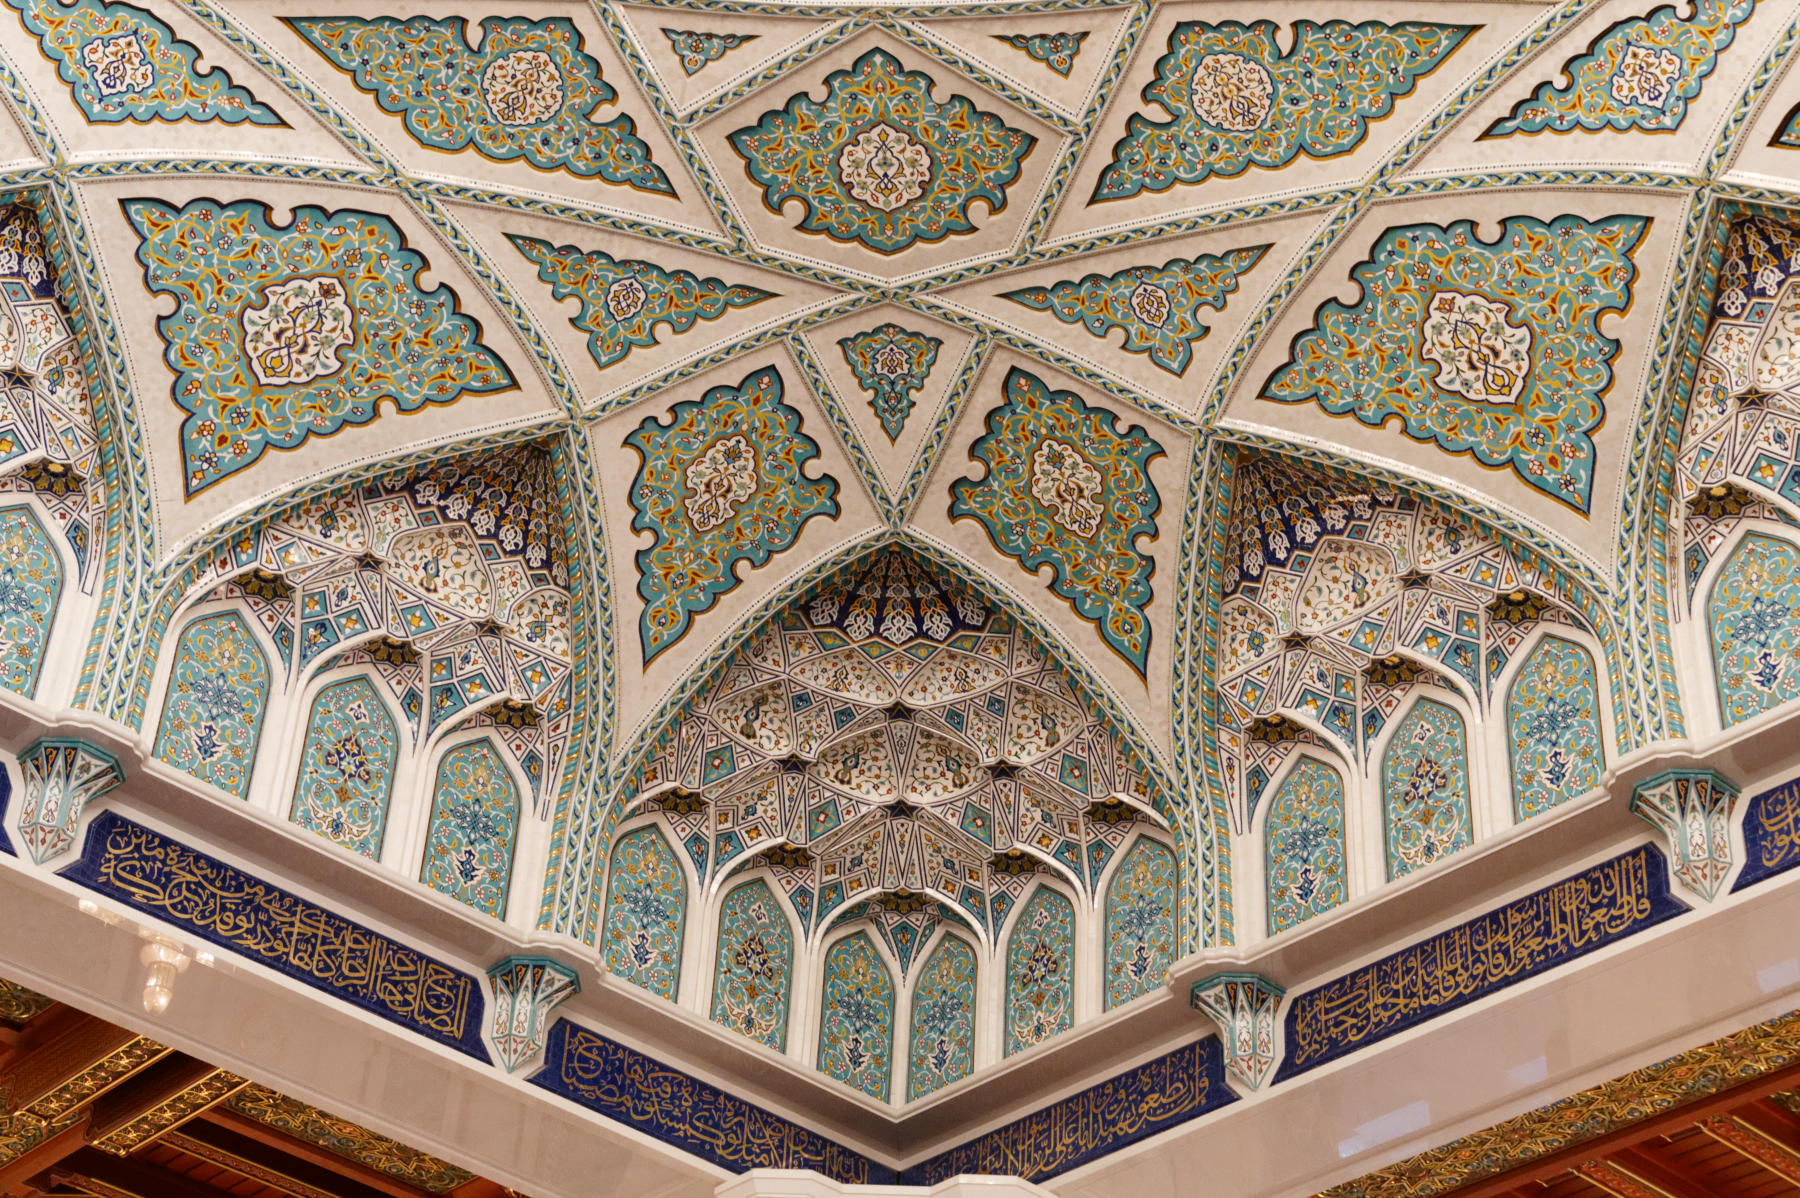 Prayer Hall - ceiling detail